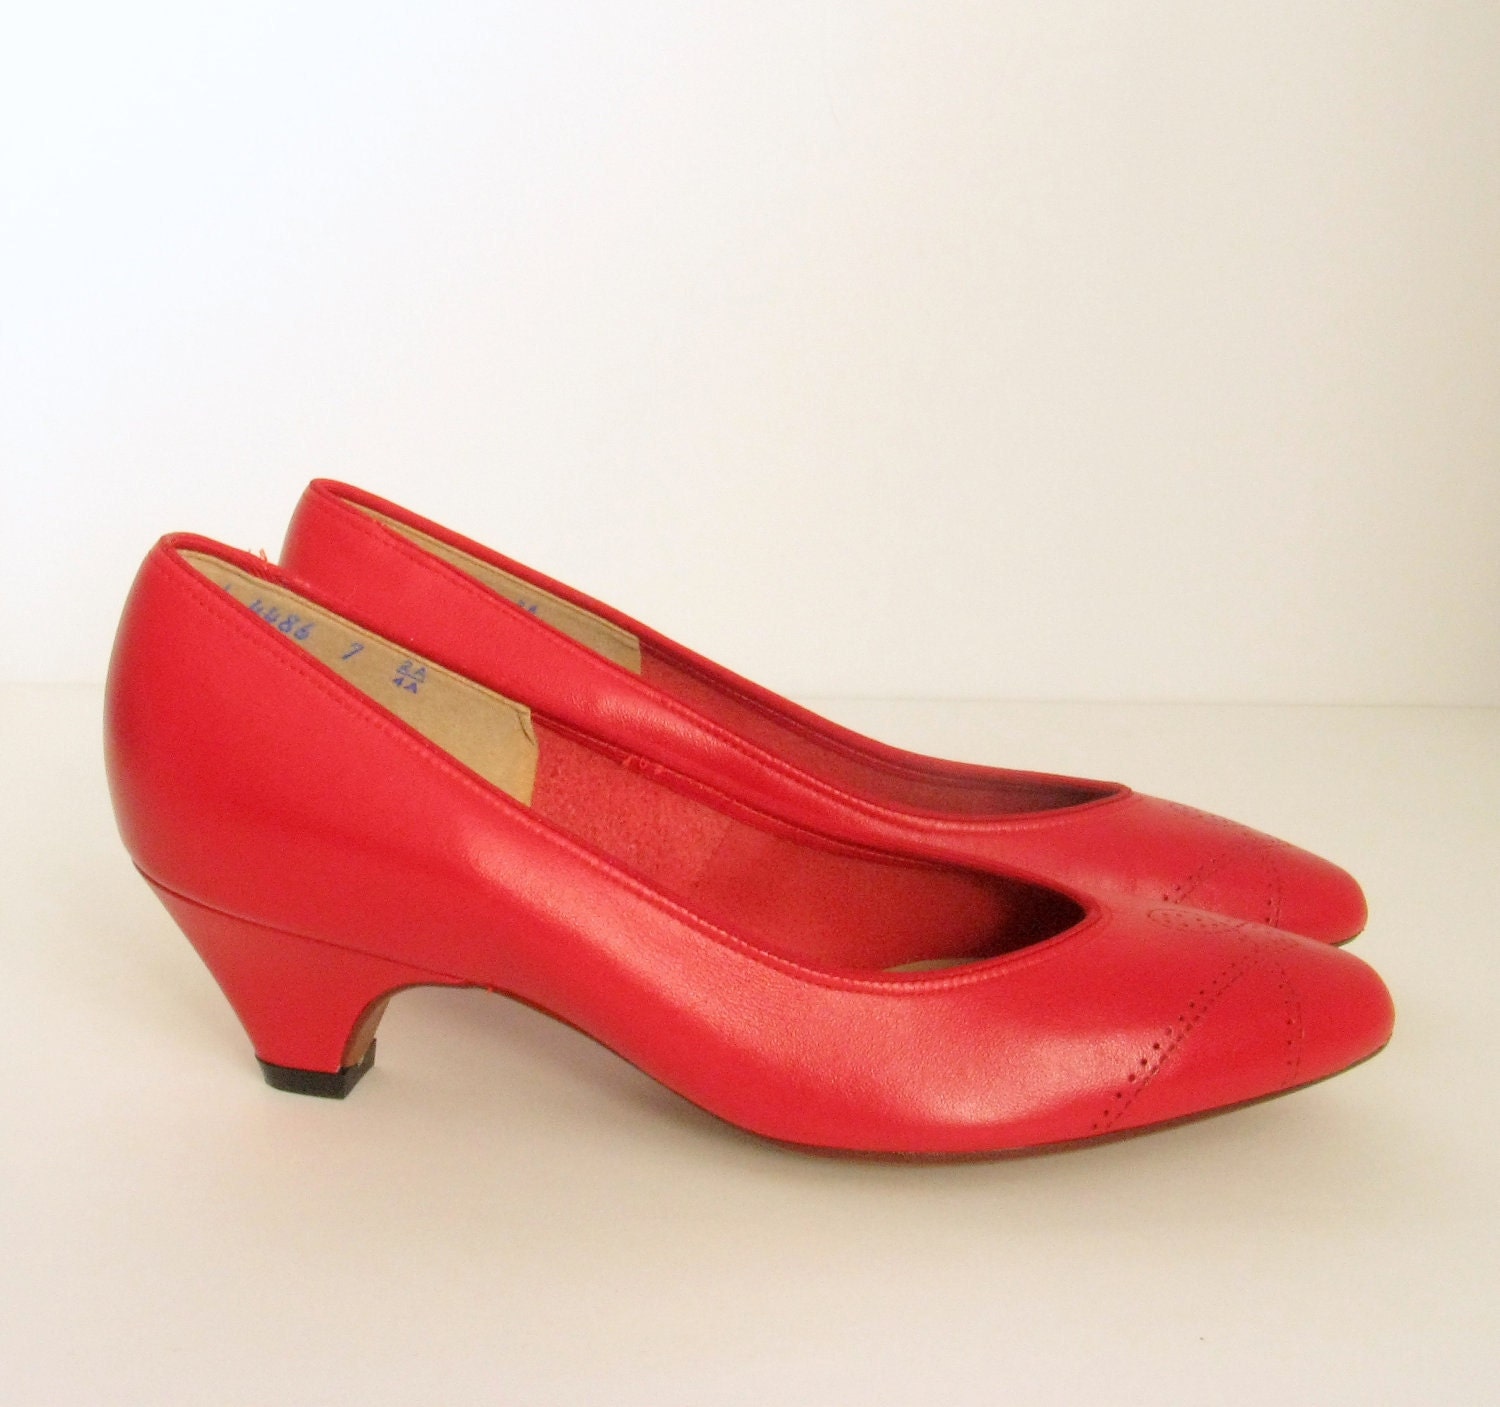 Vintage Red Kitten Heels - Size 7 - 1980s Leather - Unworn - Naturalizer